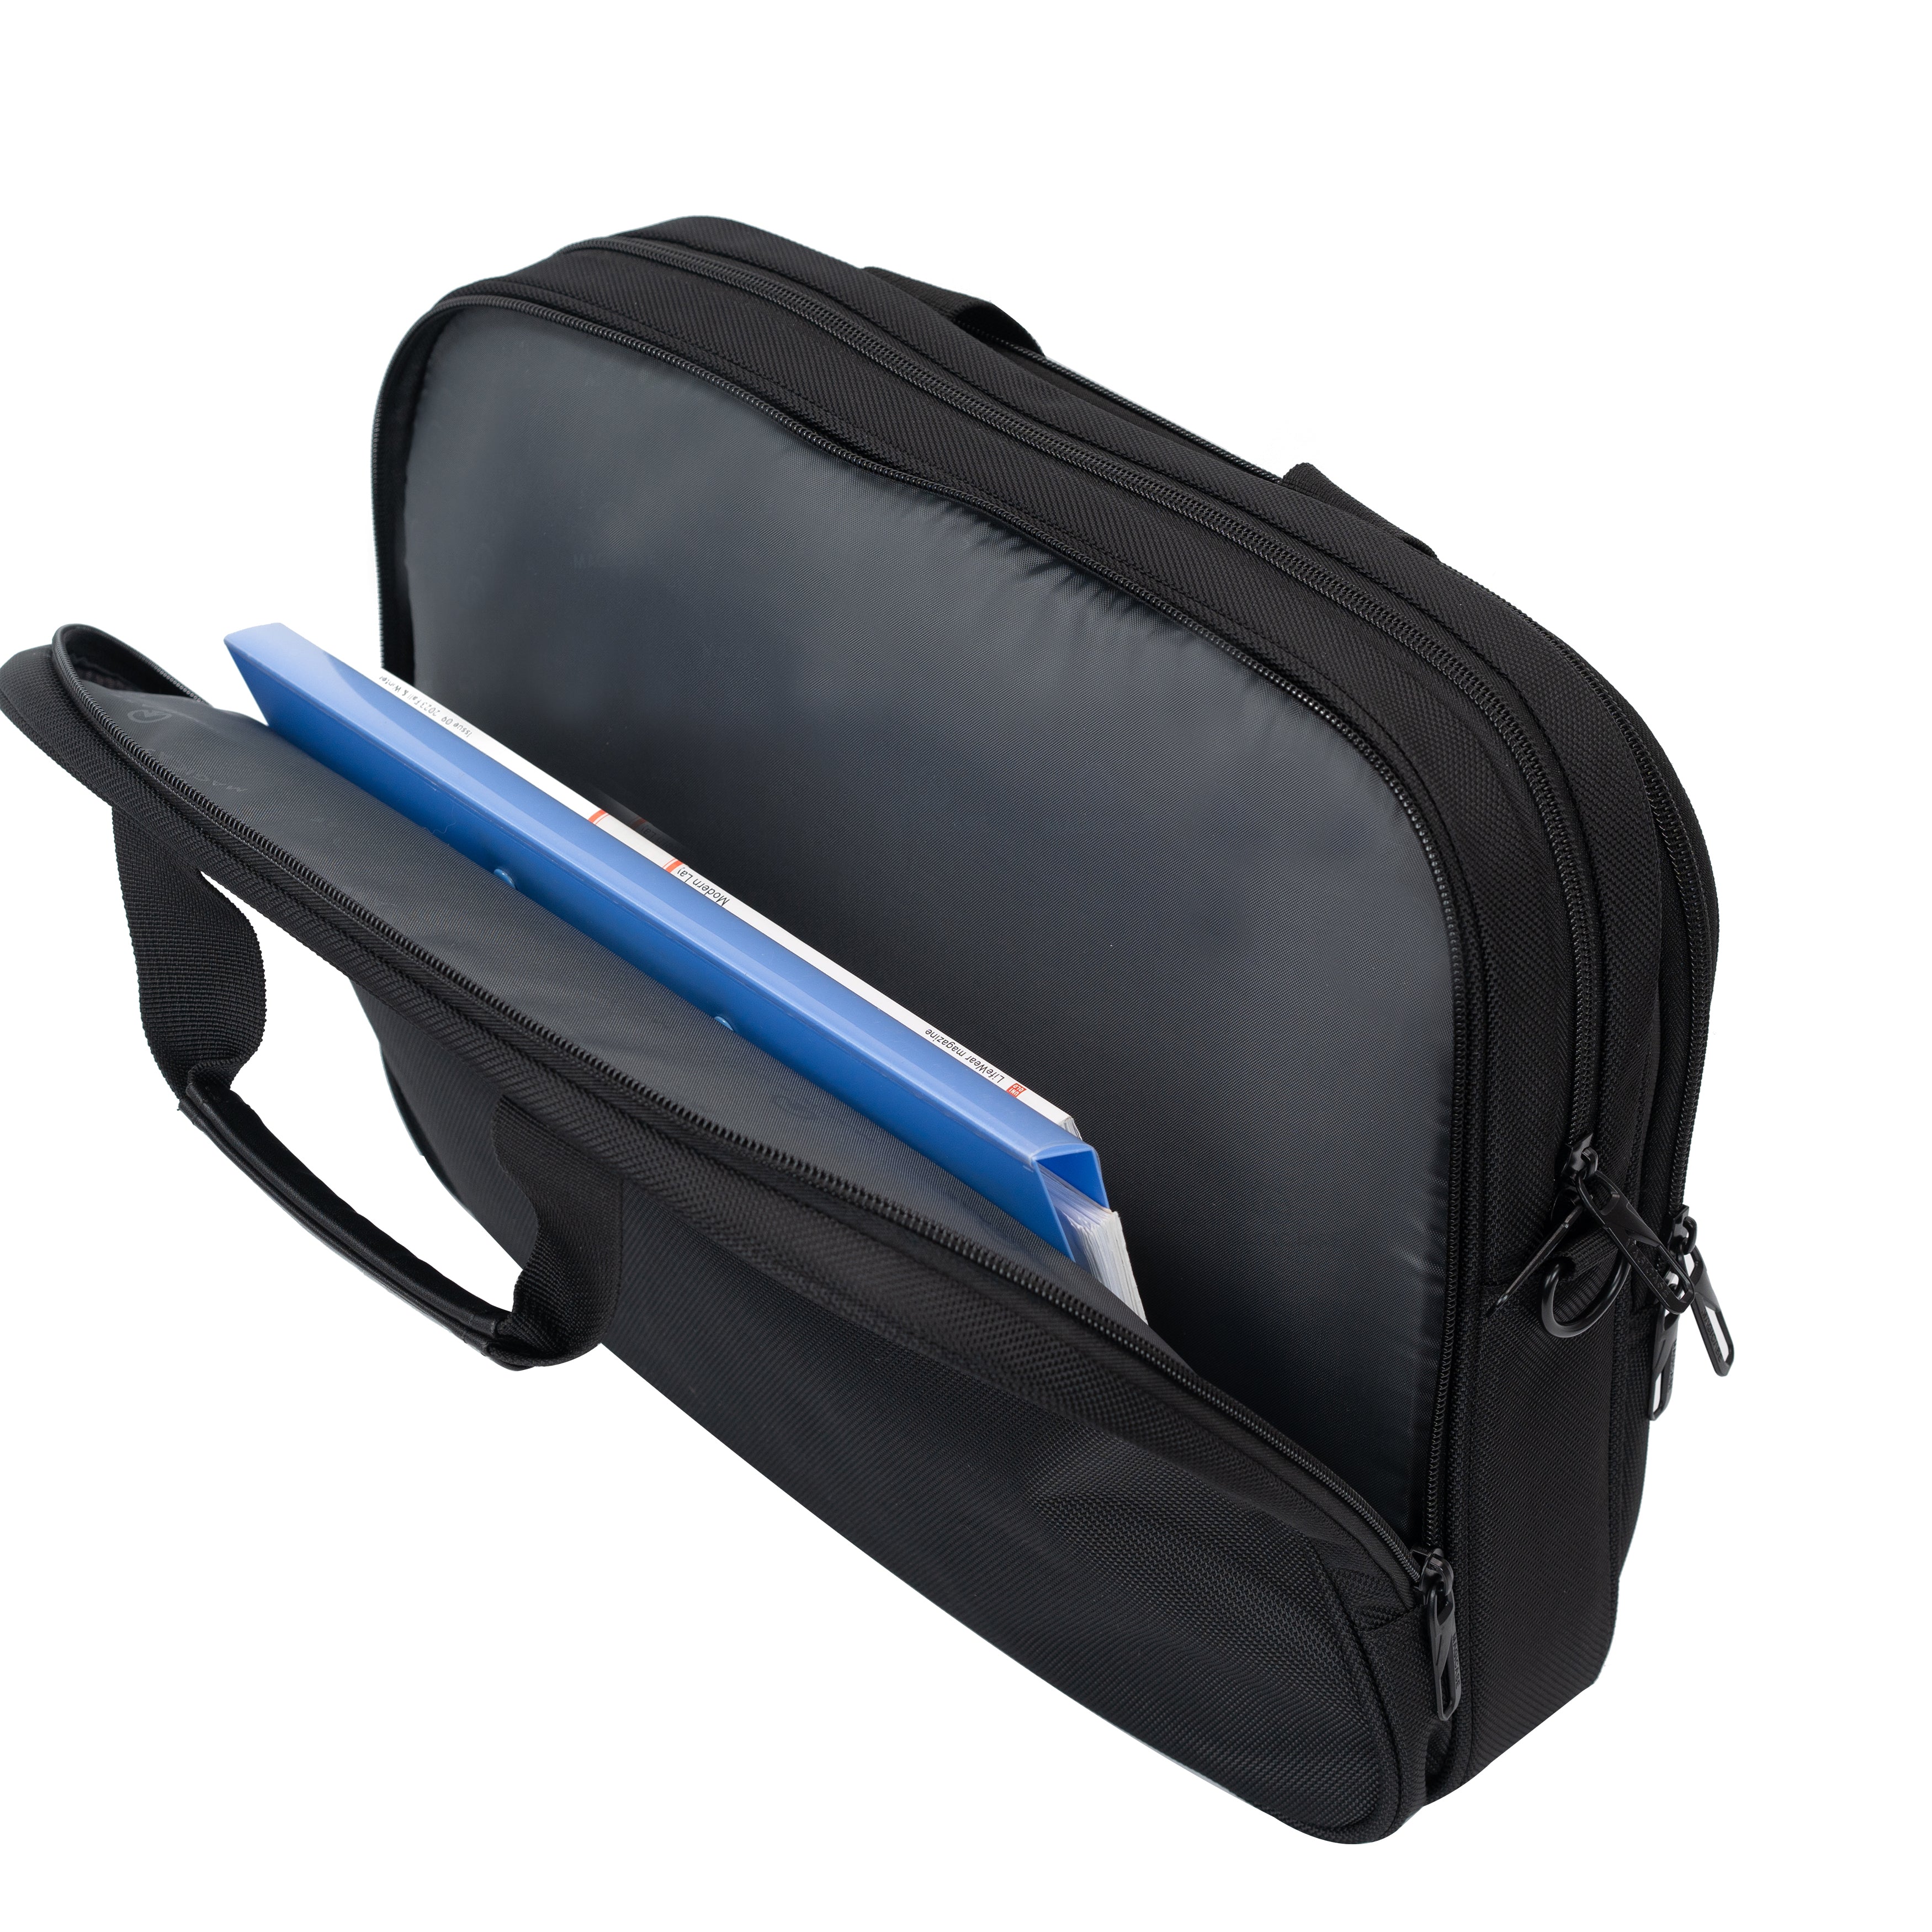 Cabinpro Premium Laptop Bag 15.6-inch Water Resistant Shoulder Computer Bag with Adjustable Shoulder Strap for Men and Women, CP013